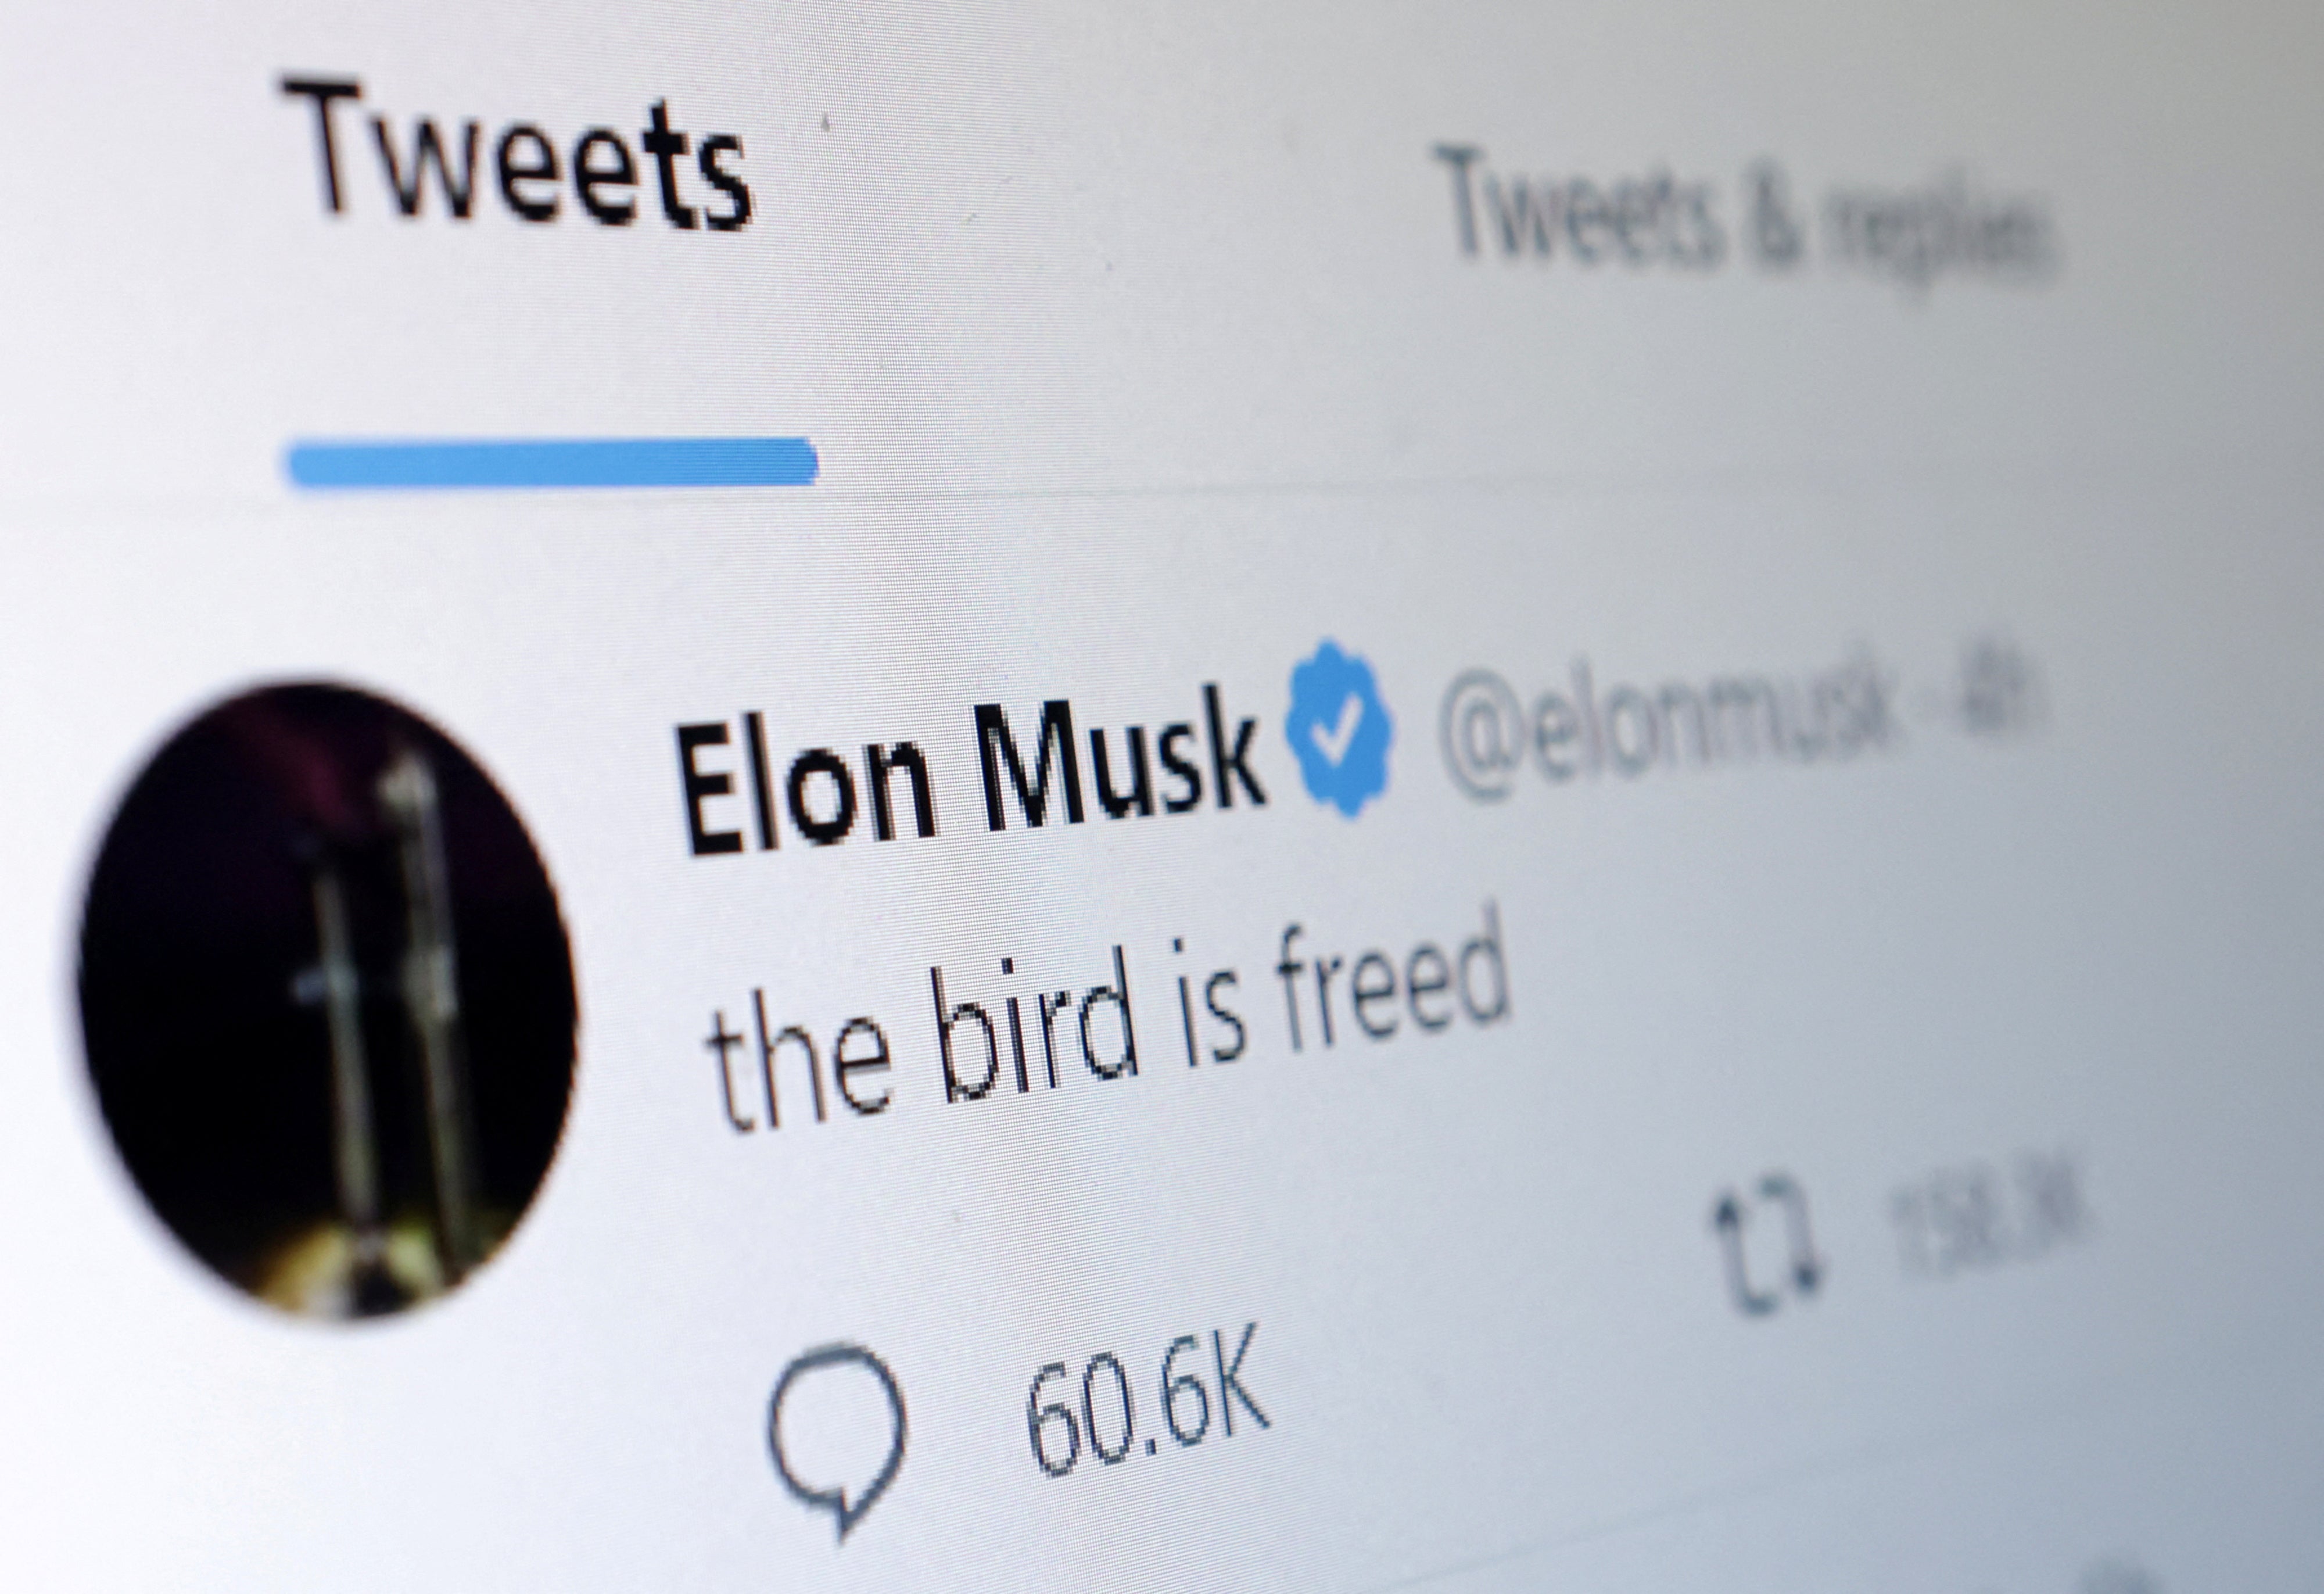 Elon Musk’s tweet reading “The bird is freed”